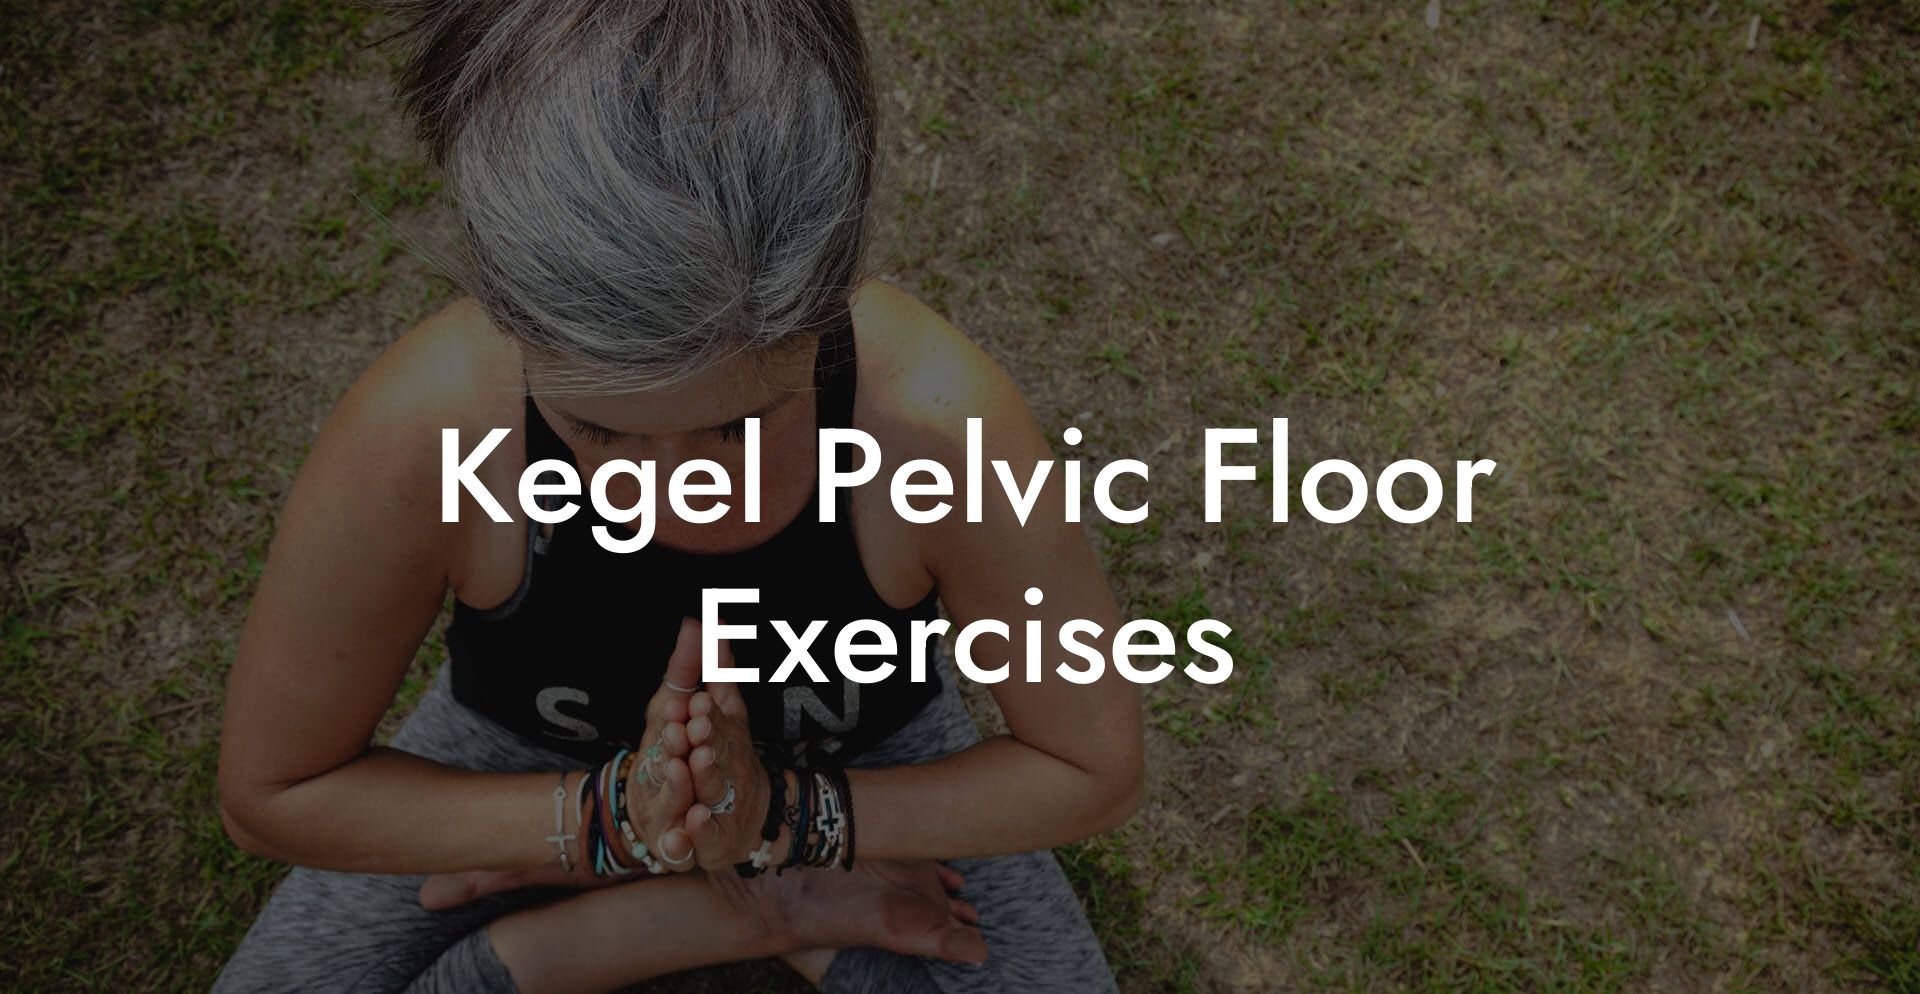 Kegel Pelvic Floor Exercises